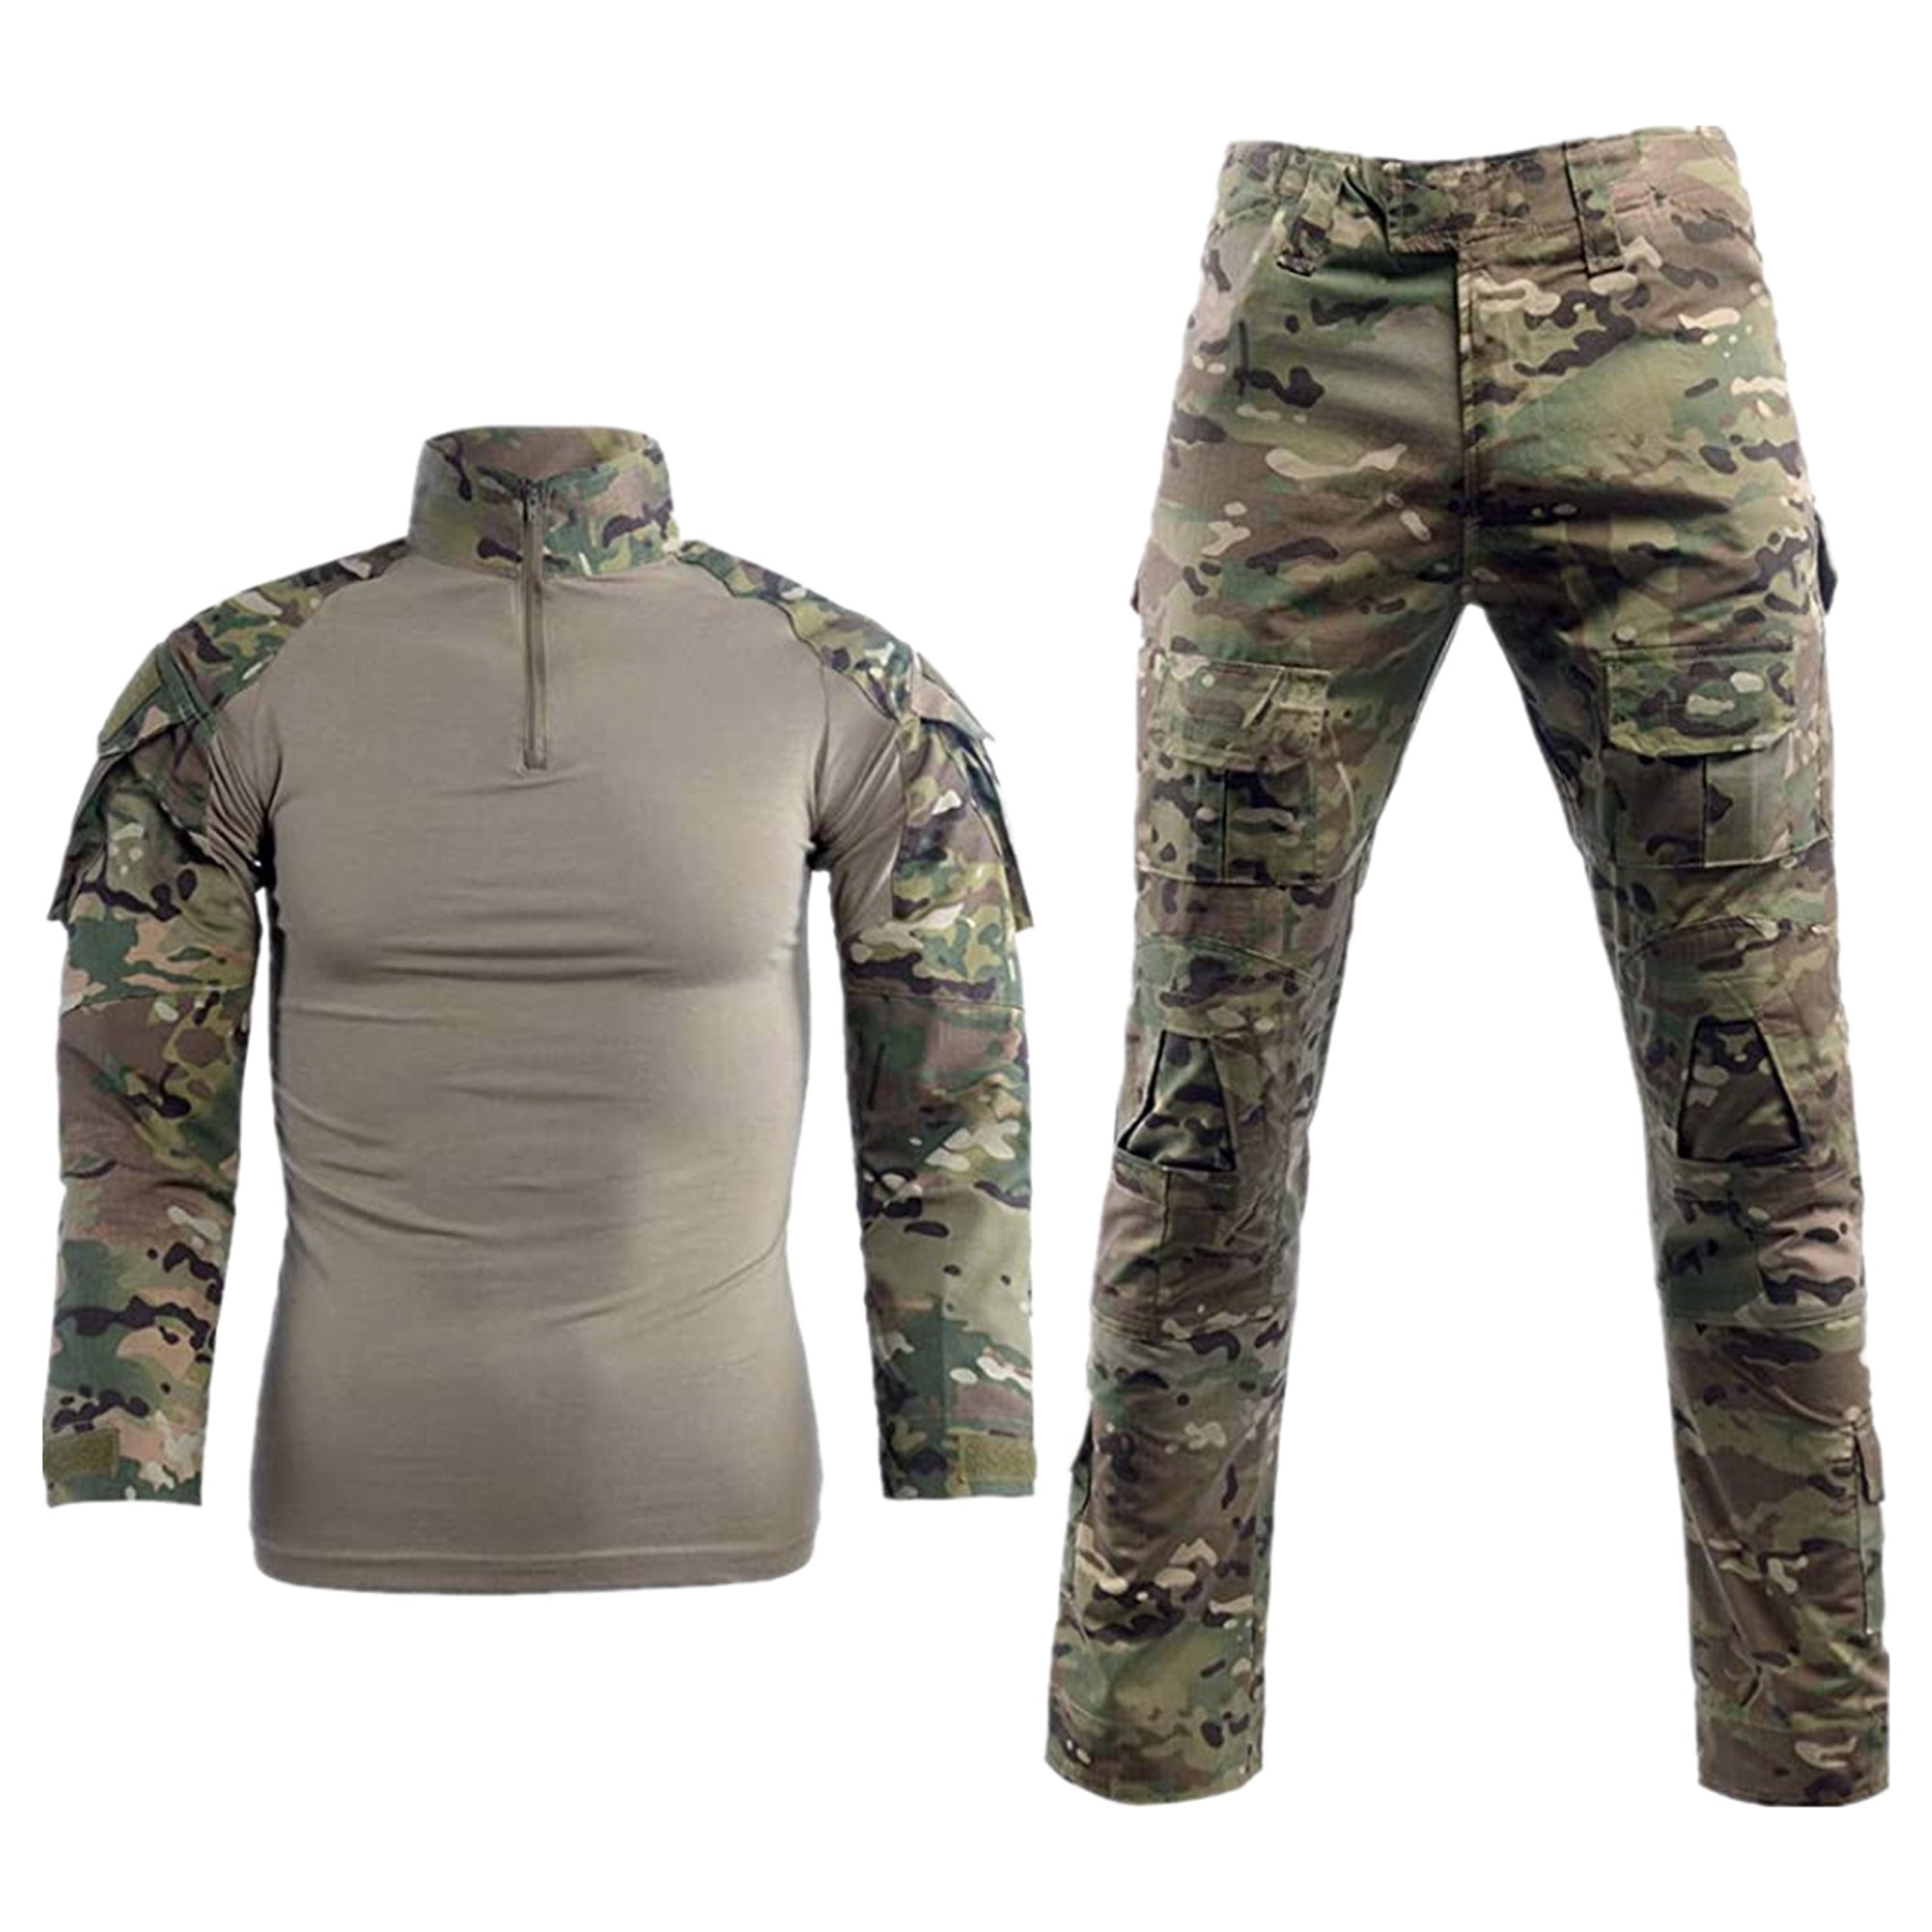 Army G3 Combat Uniform Shirt & Pants Set Military Airsoft MultiCam Camo BDU 